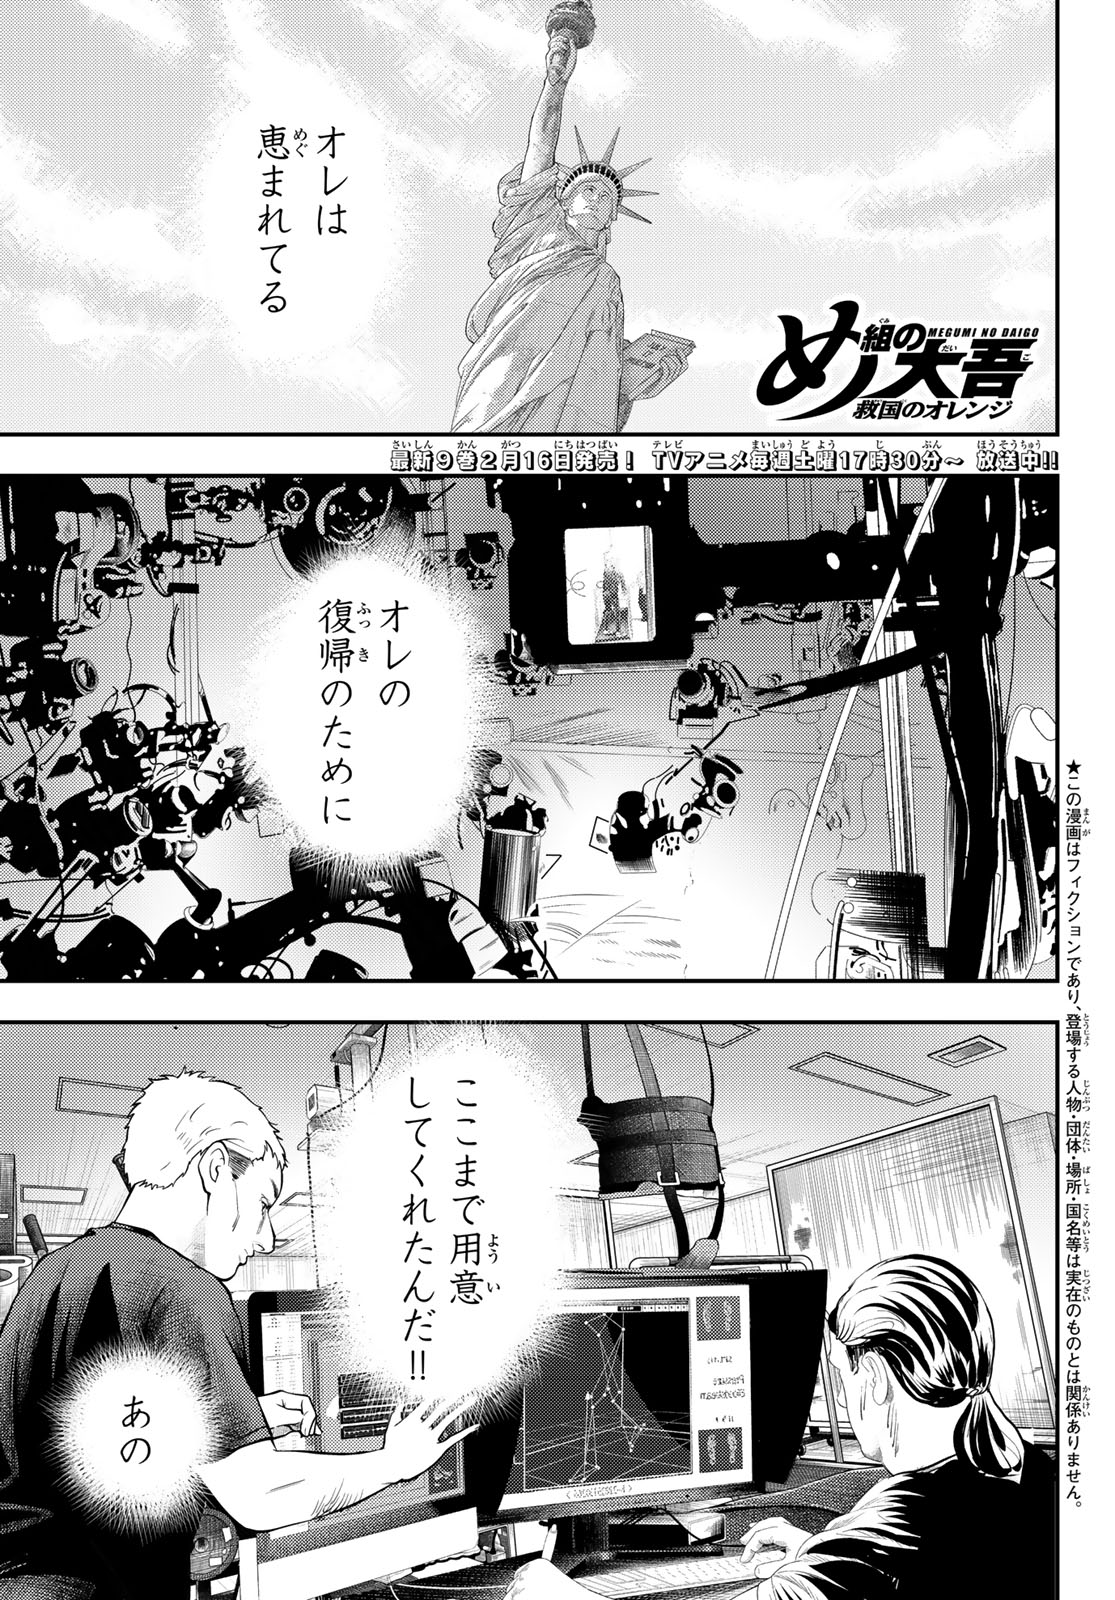 Megumi no Daigo - Chapter 35 - Page 1